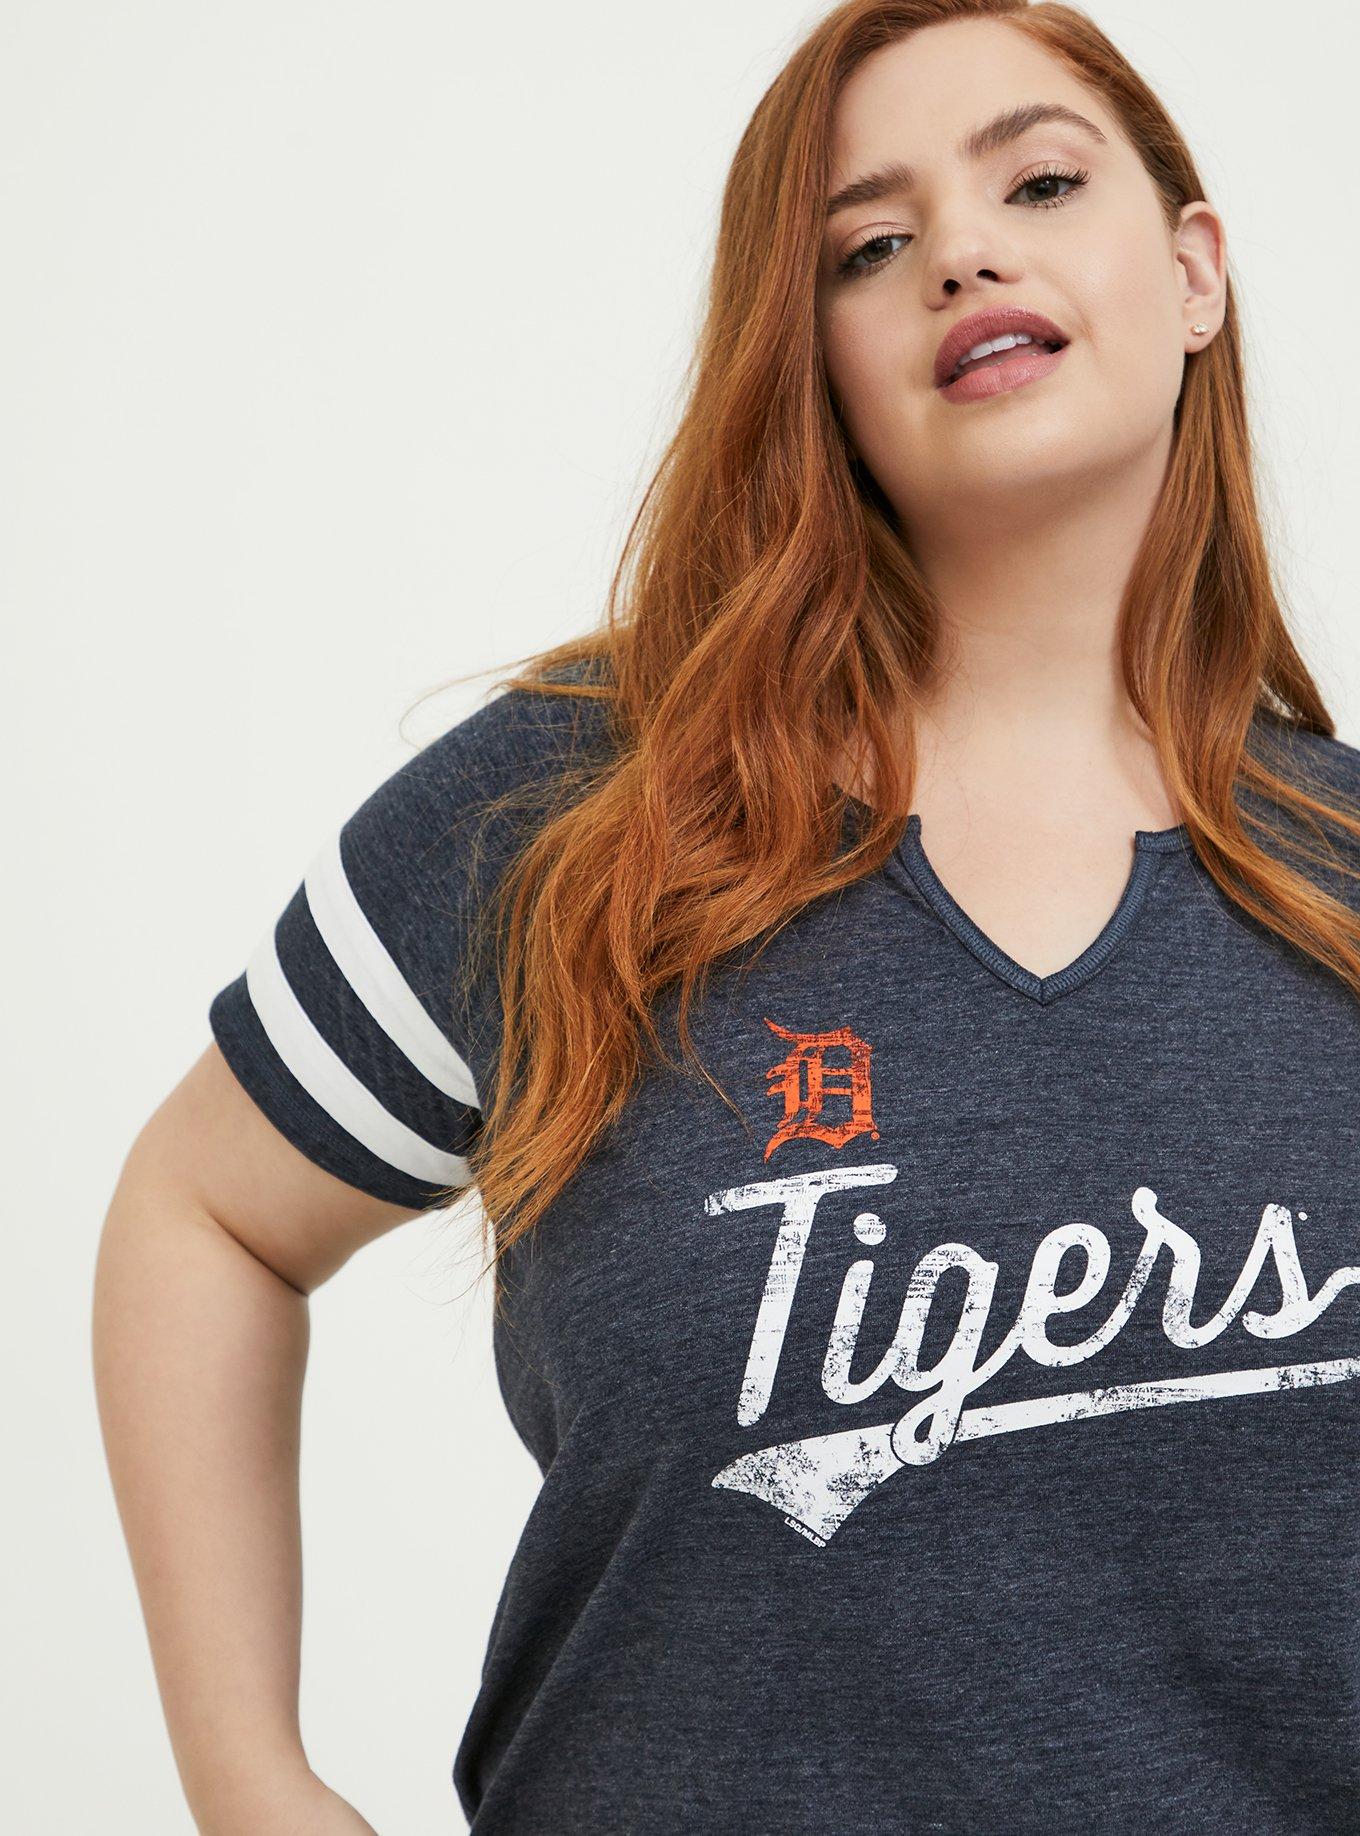 MLB Genuine Merchandise Detroit Tigers T-shirt Detroit,MI Size